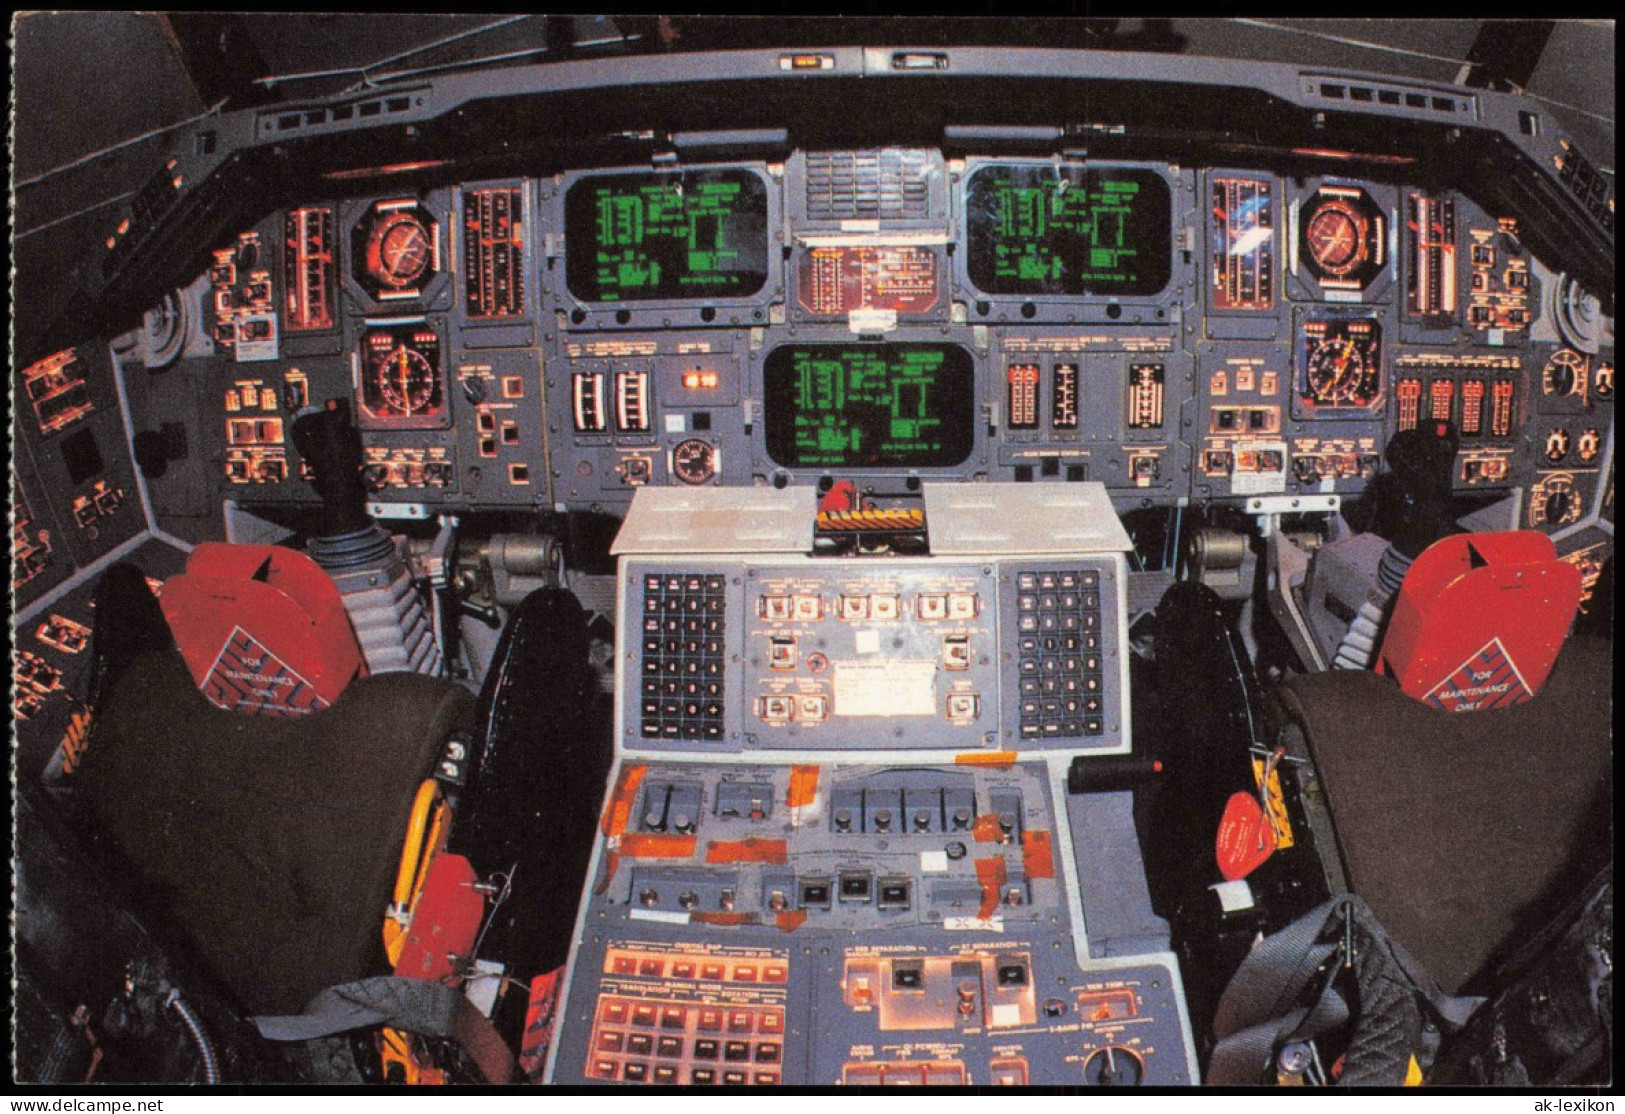 Flugwesen Raumfahrt INTERIOR VIEW OF THE SPACE SHUTTLE FLIGHT DECK 1980 - Raumfahrt